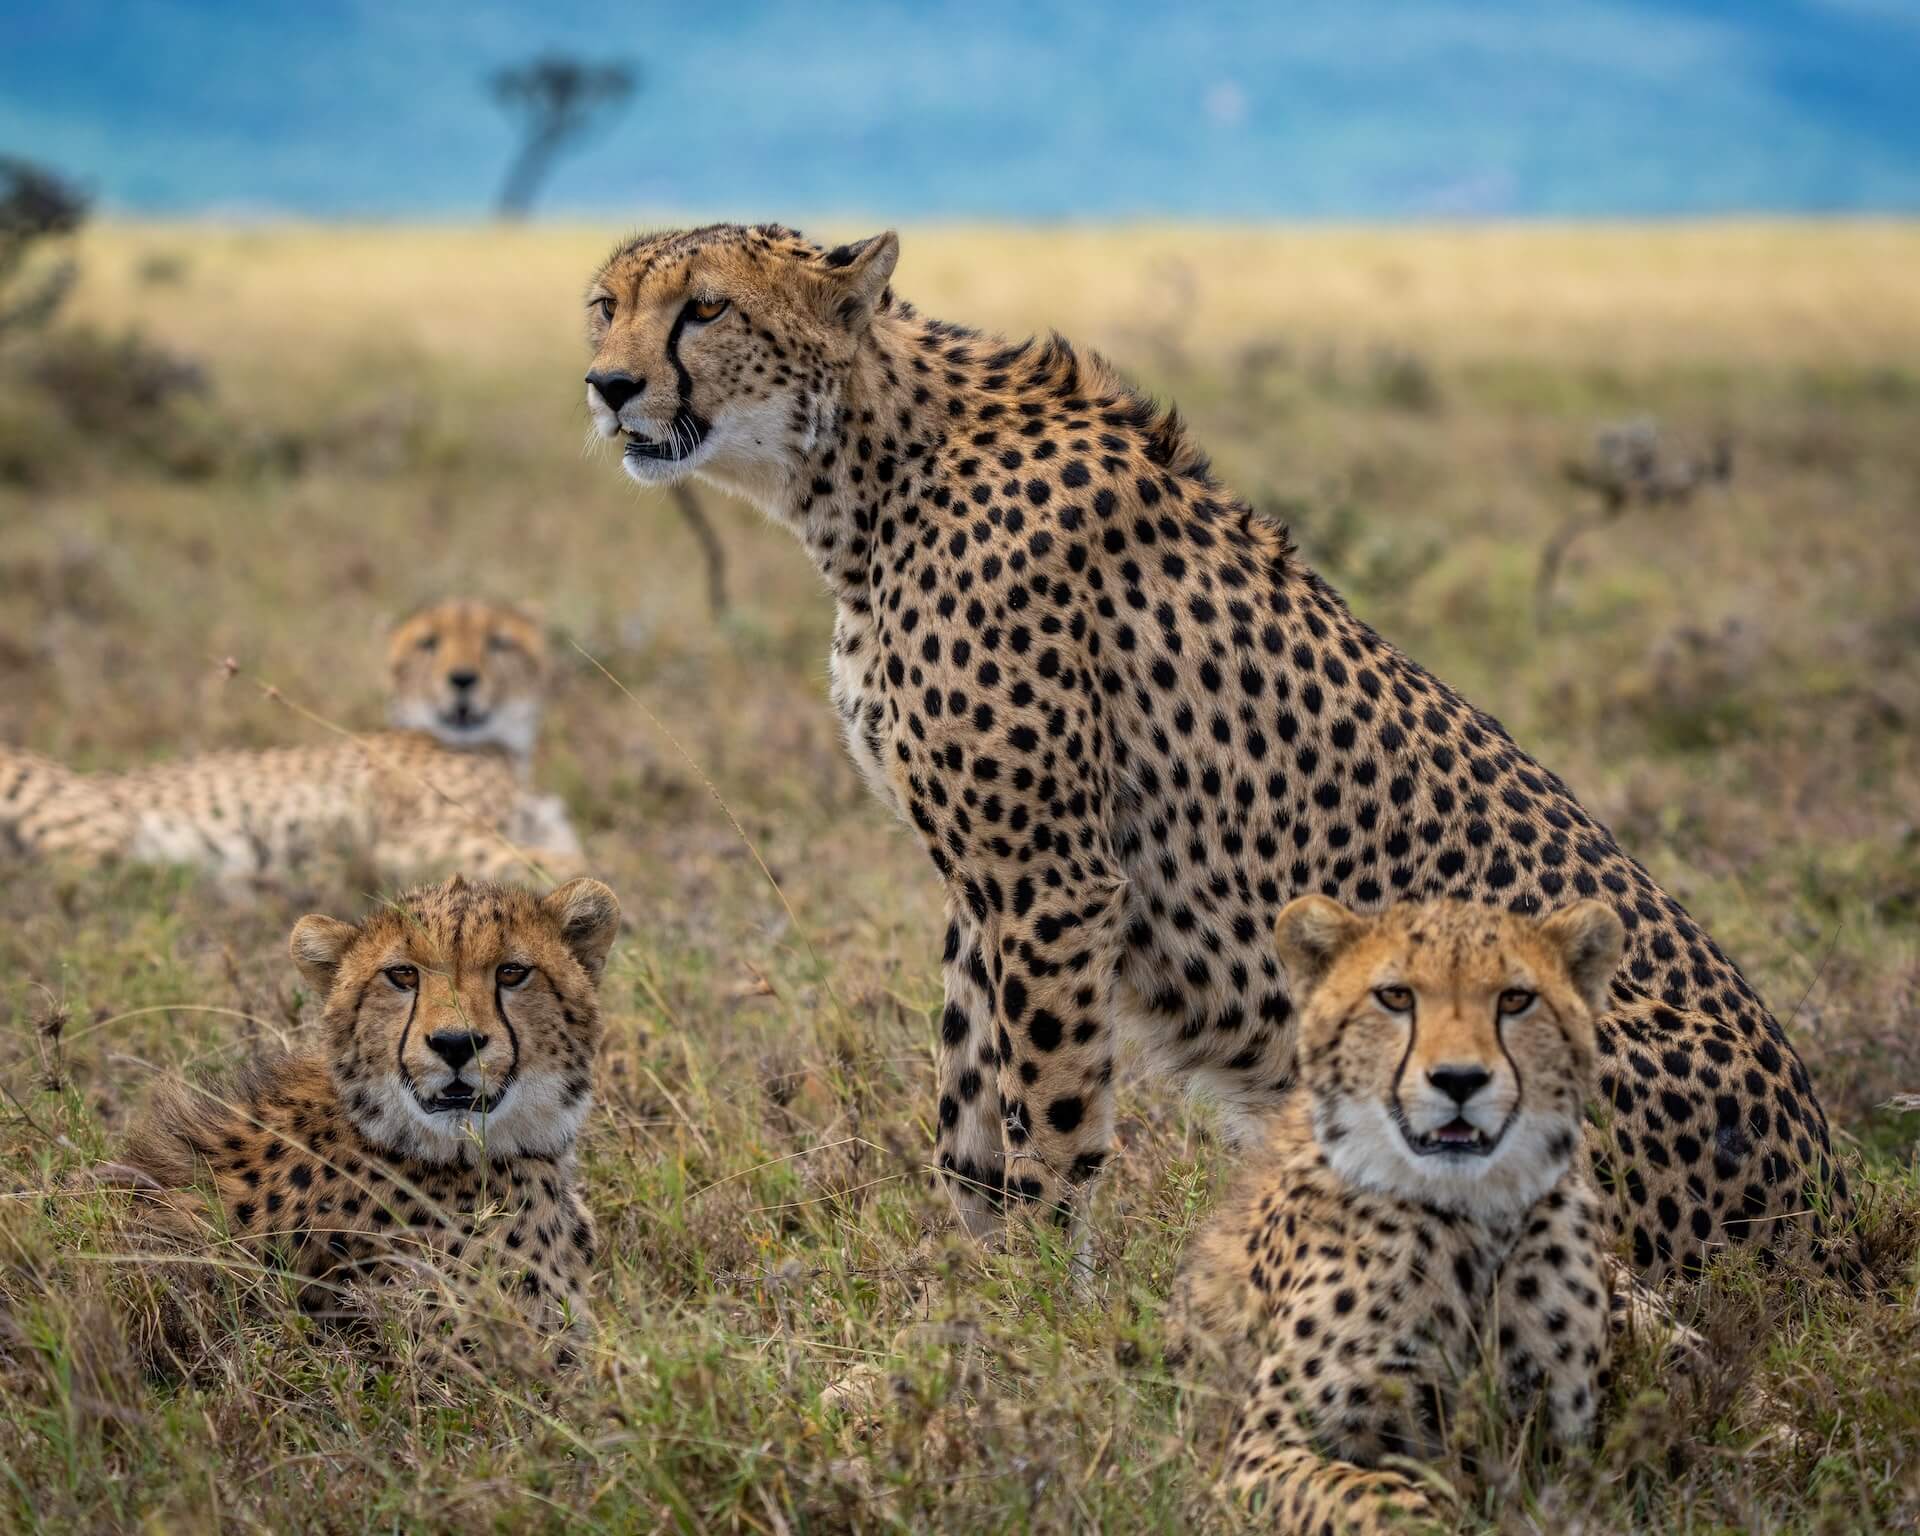 Three cheetahs relaxing in the Kenyan Savannah